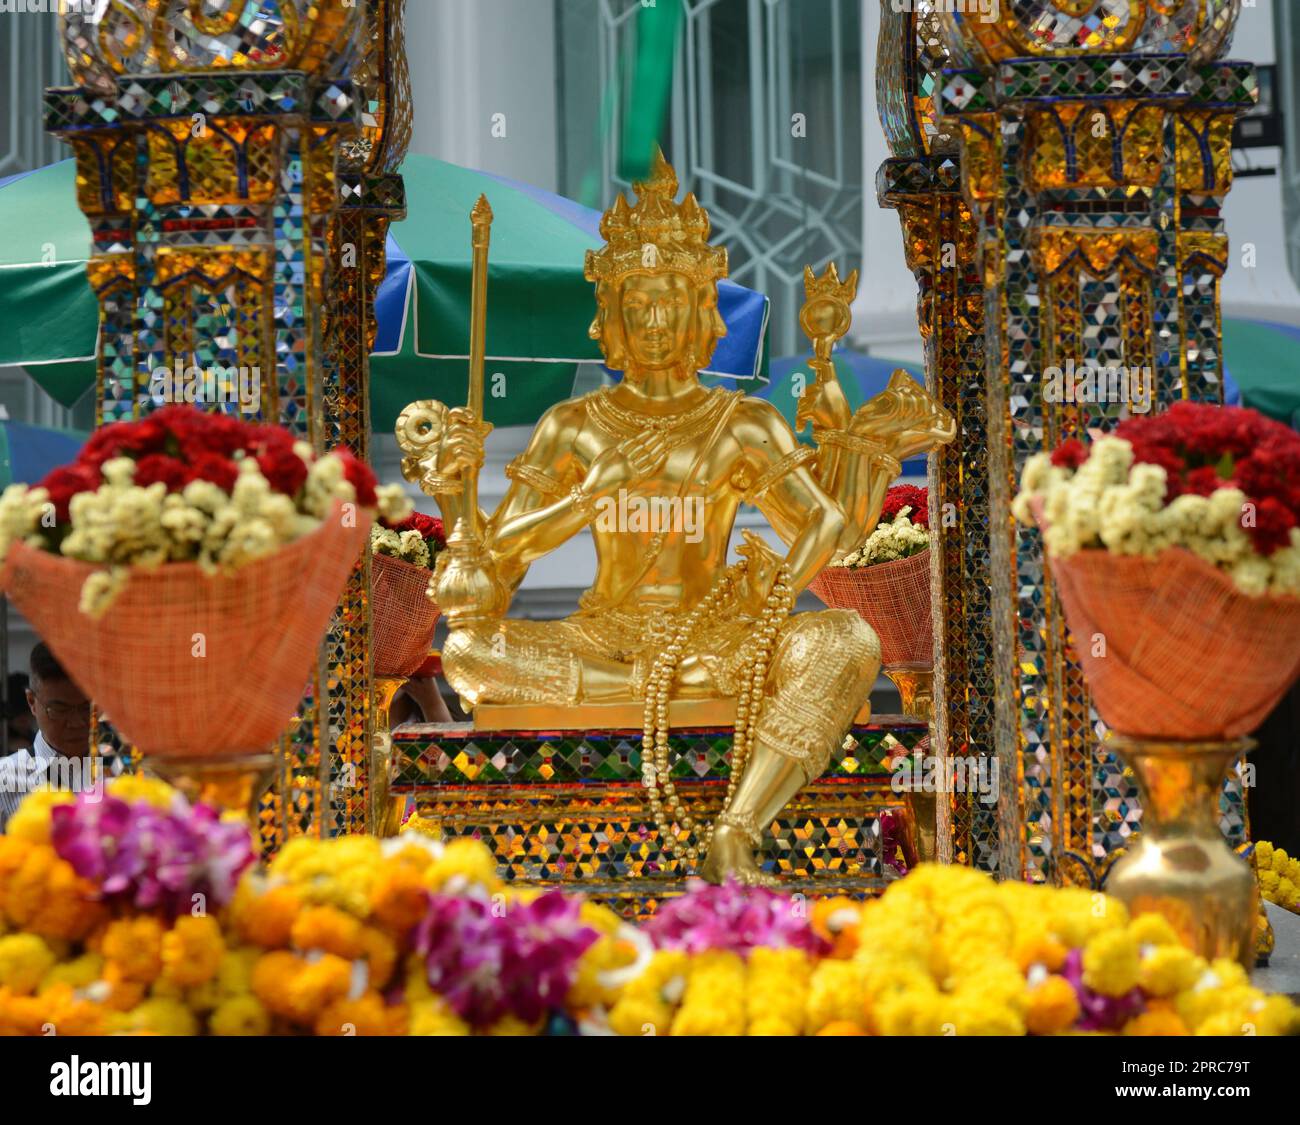 Statua del Signore Maha Brahma al Santuario di Erawan a Chid Lom, Bangkok, Thailandia. Foto Stock